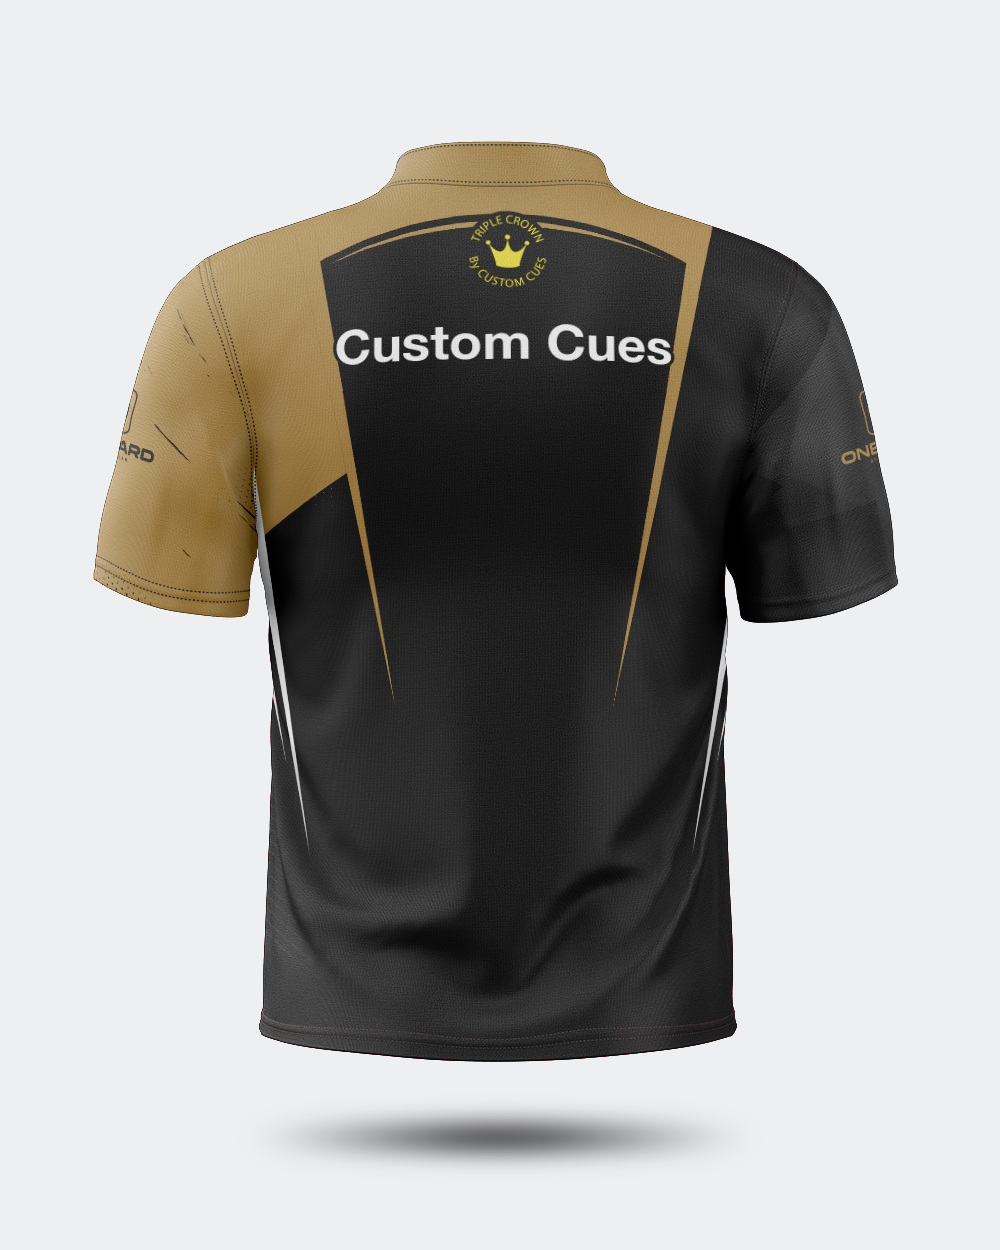 Custom Cues Jersey - Gold